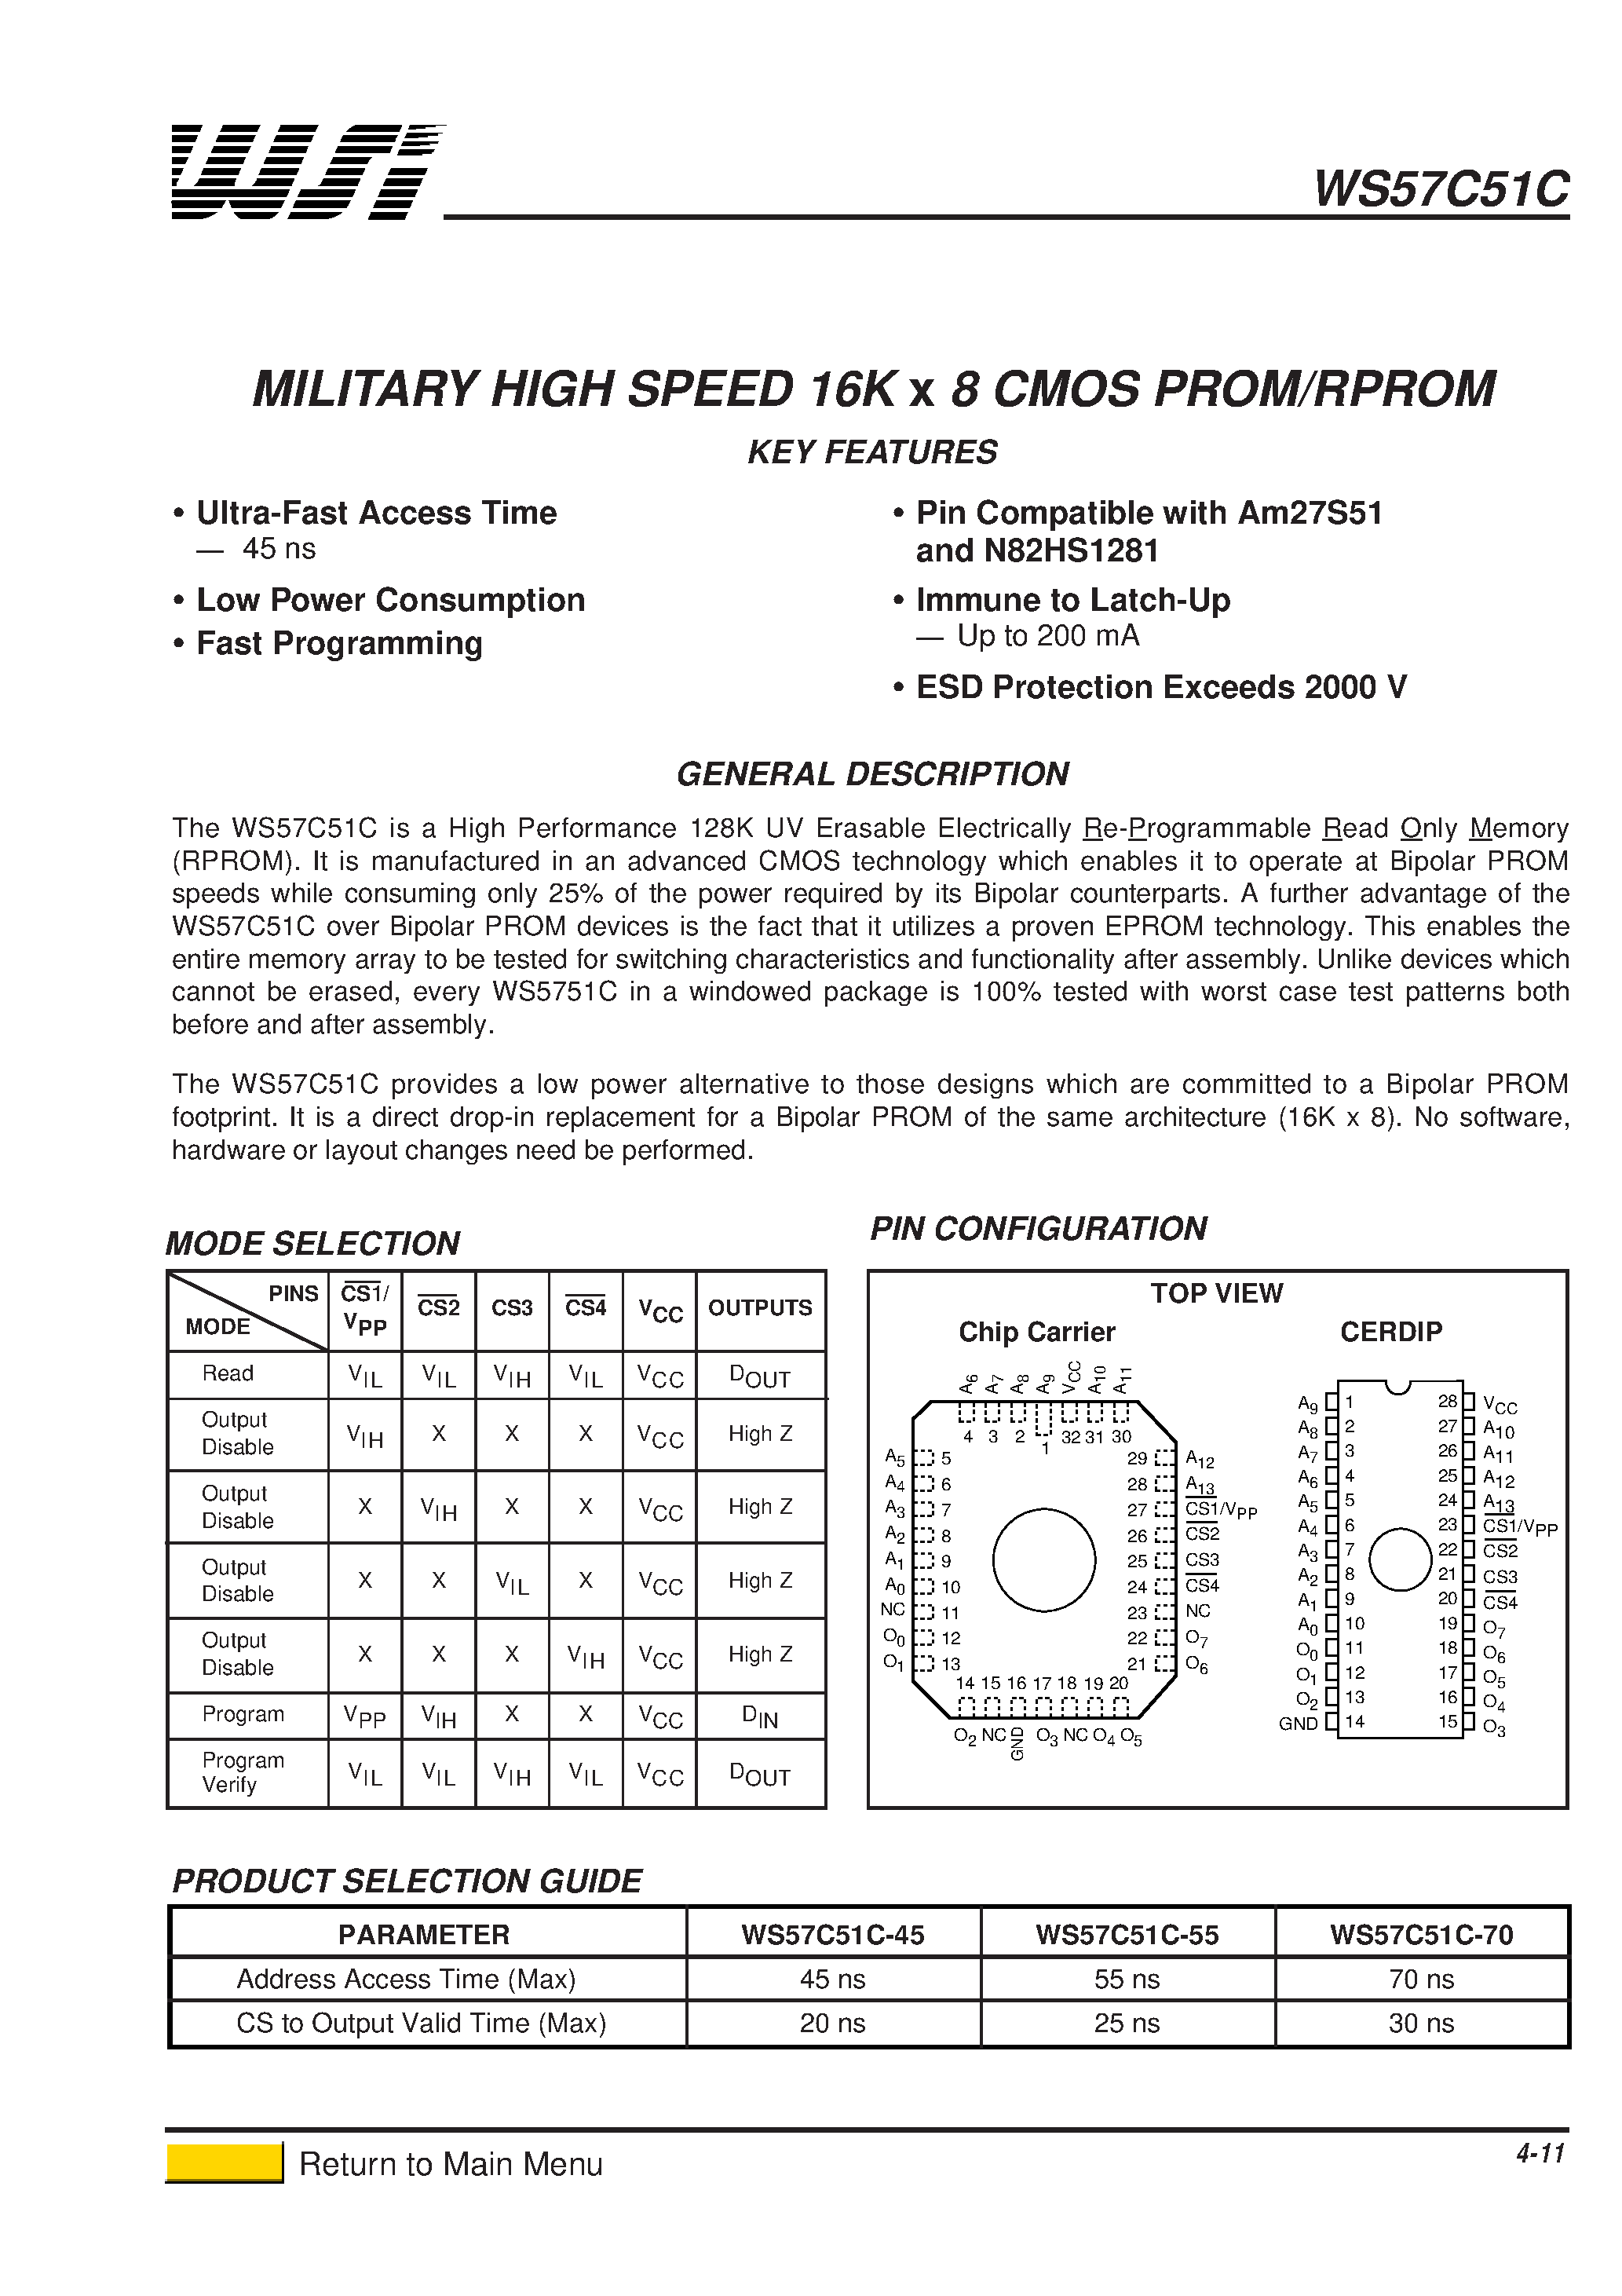 Datasheet WS57C51C-1 - MILITARY HIGH SPEED 16K x 8 CMOS PROM/RPROM page 1